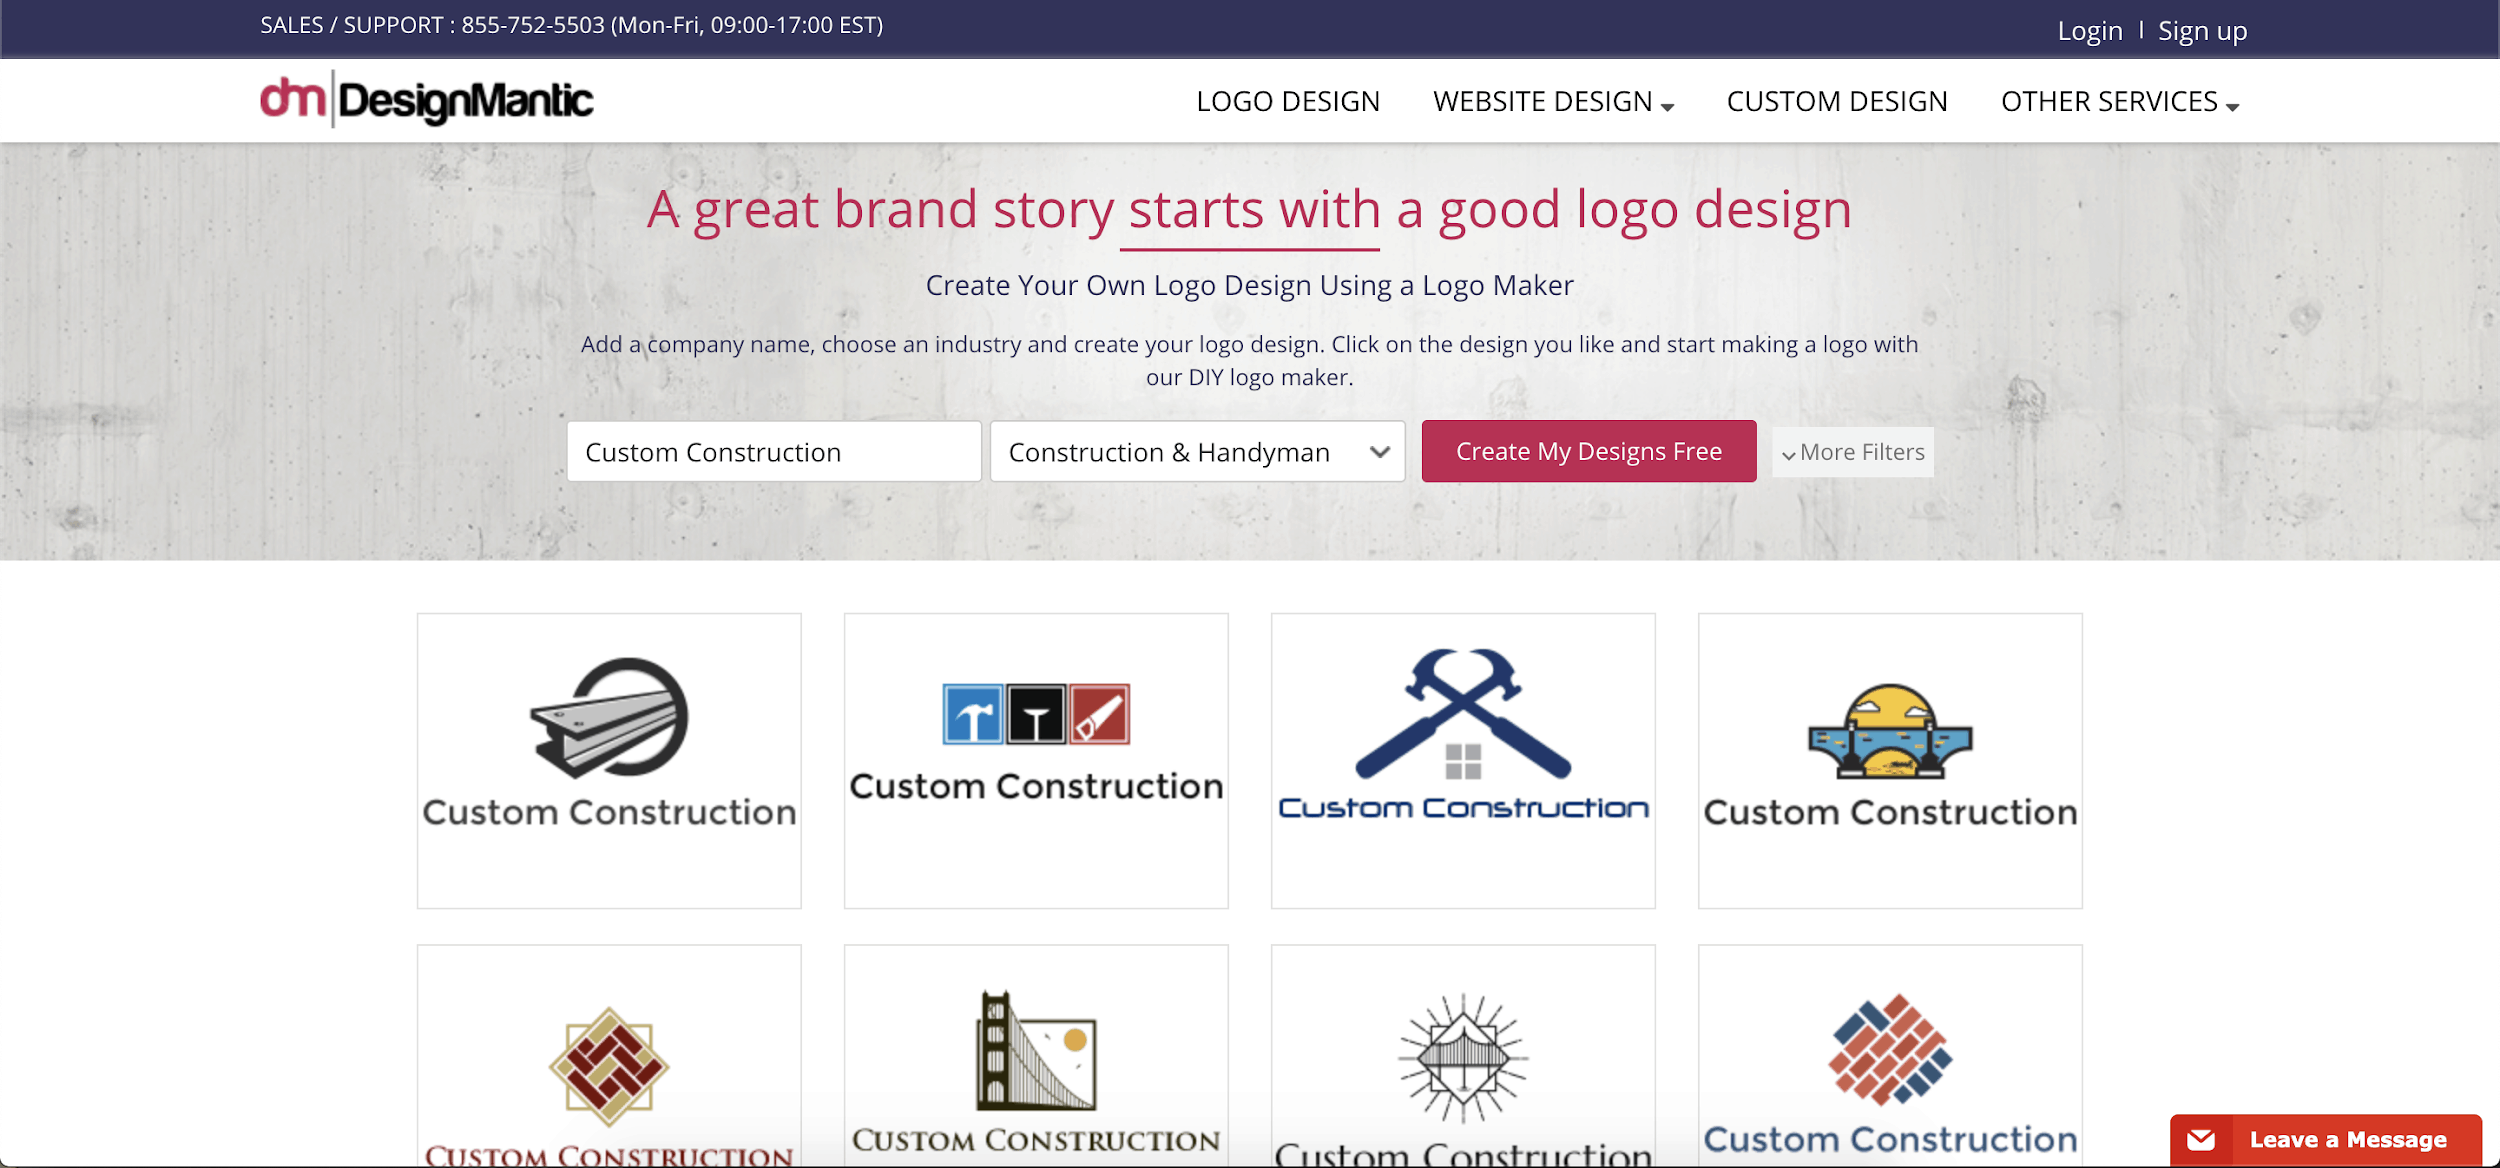 Create Your Own Custom Logo